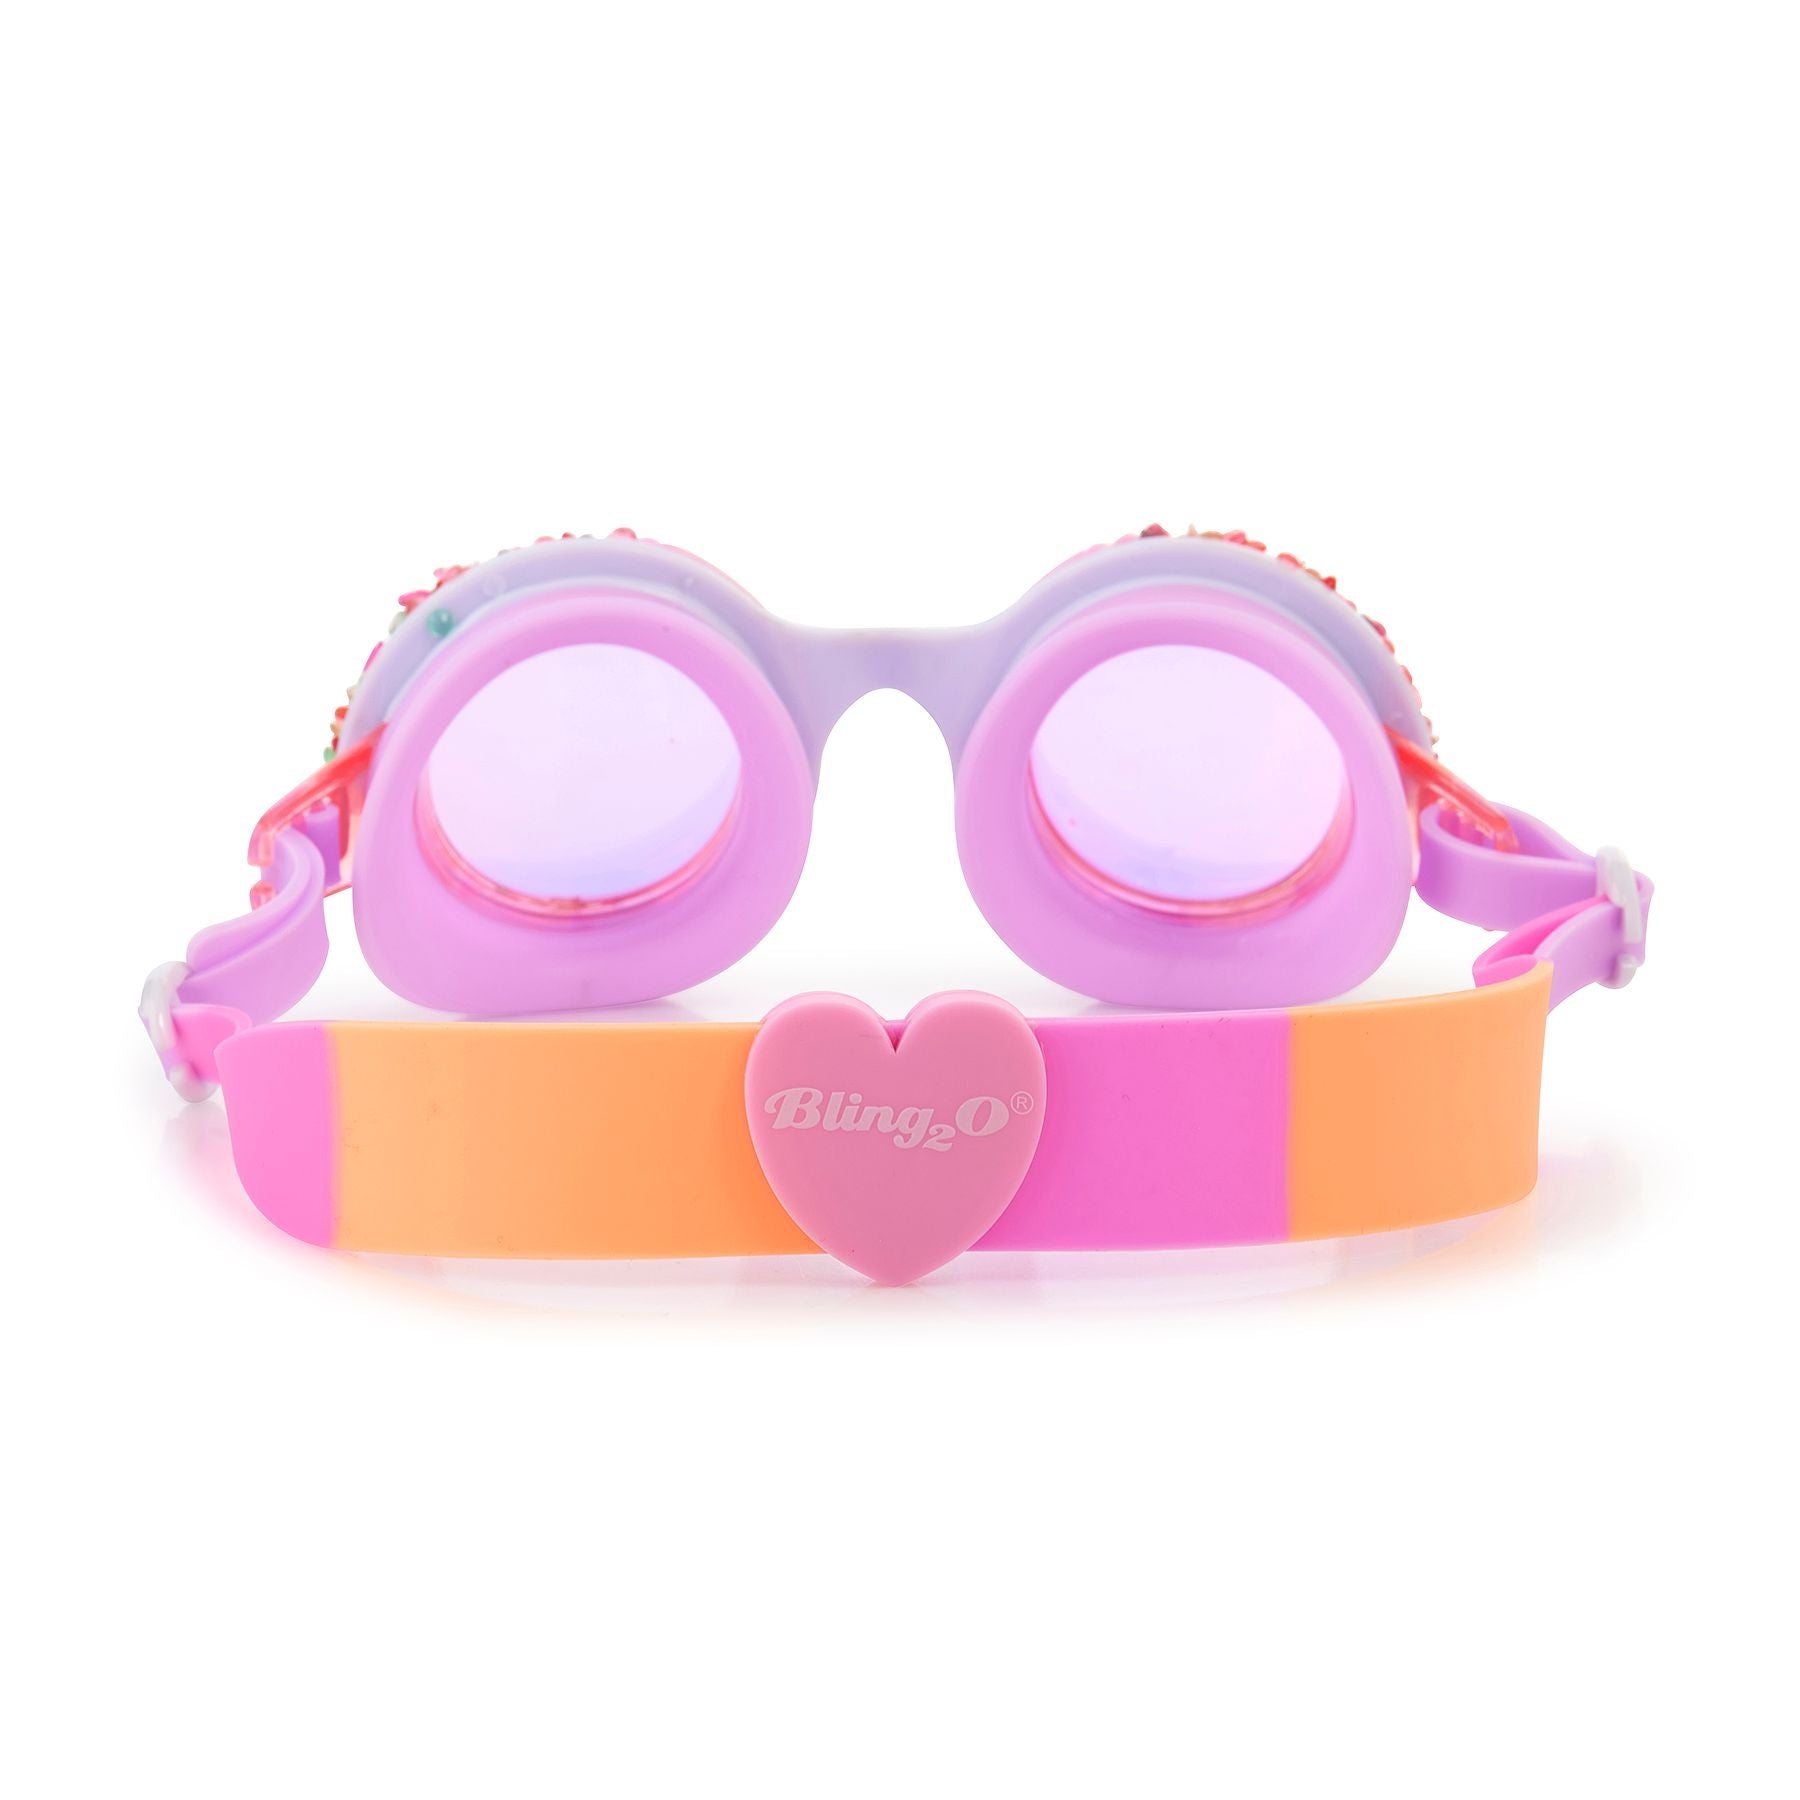 Bling2o Swim Goggles - Cupcake